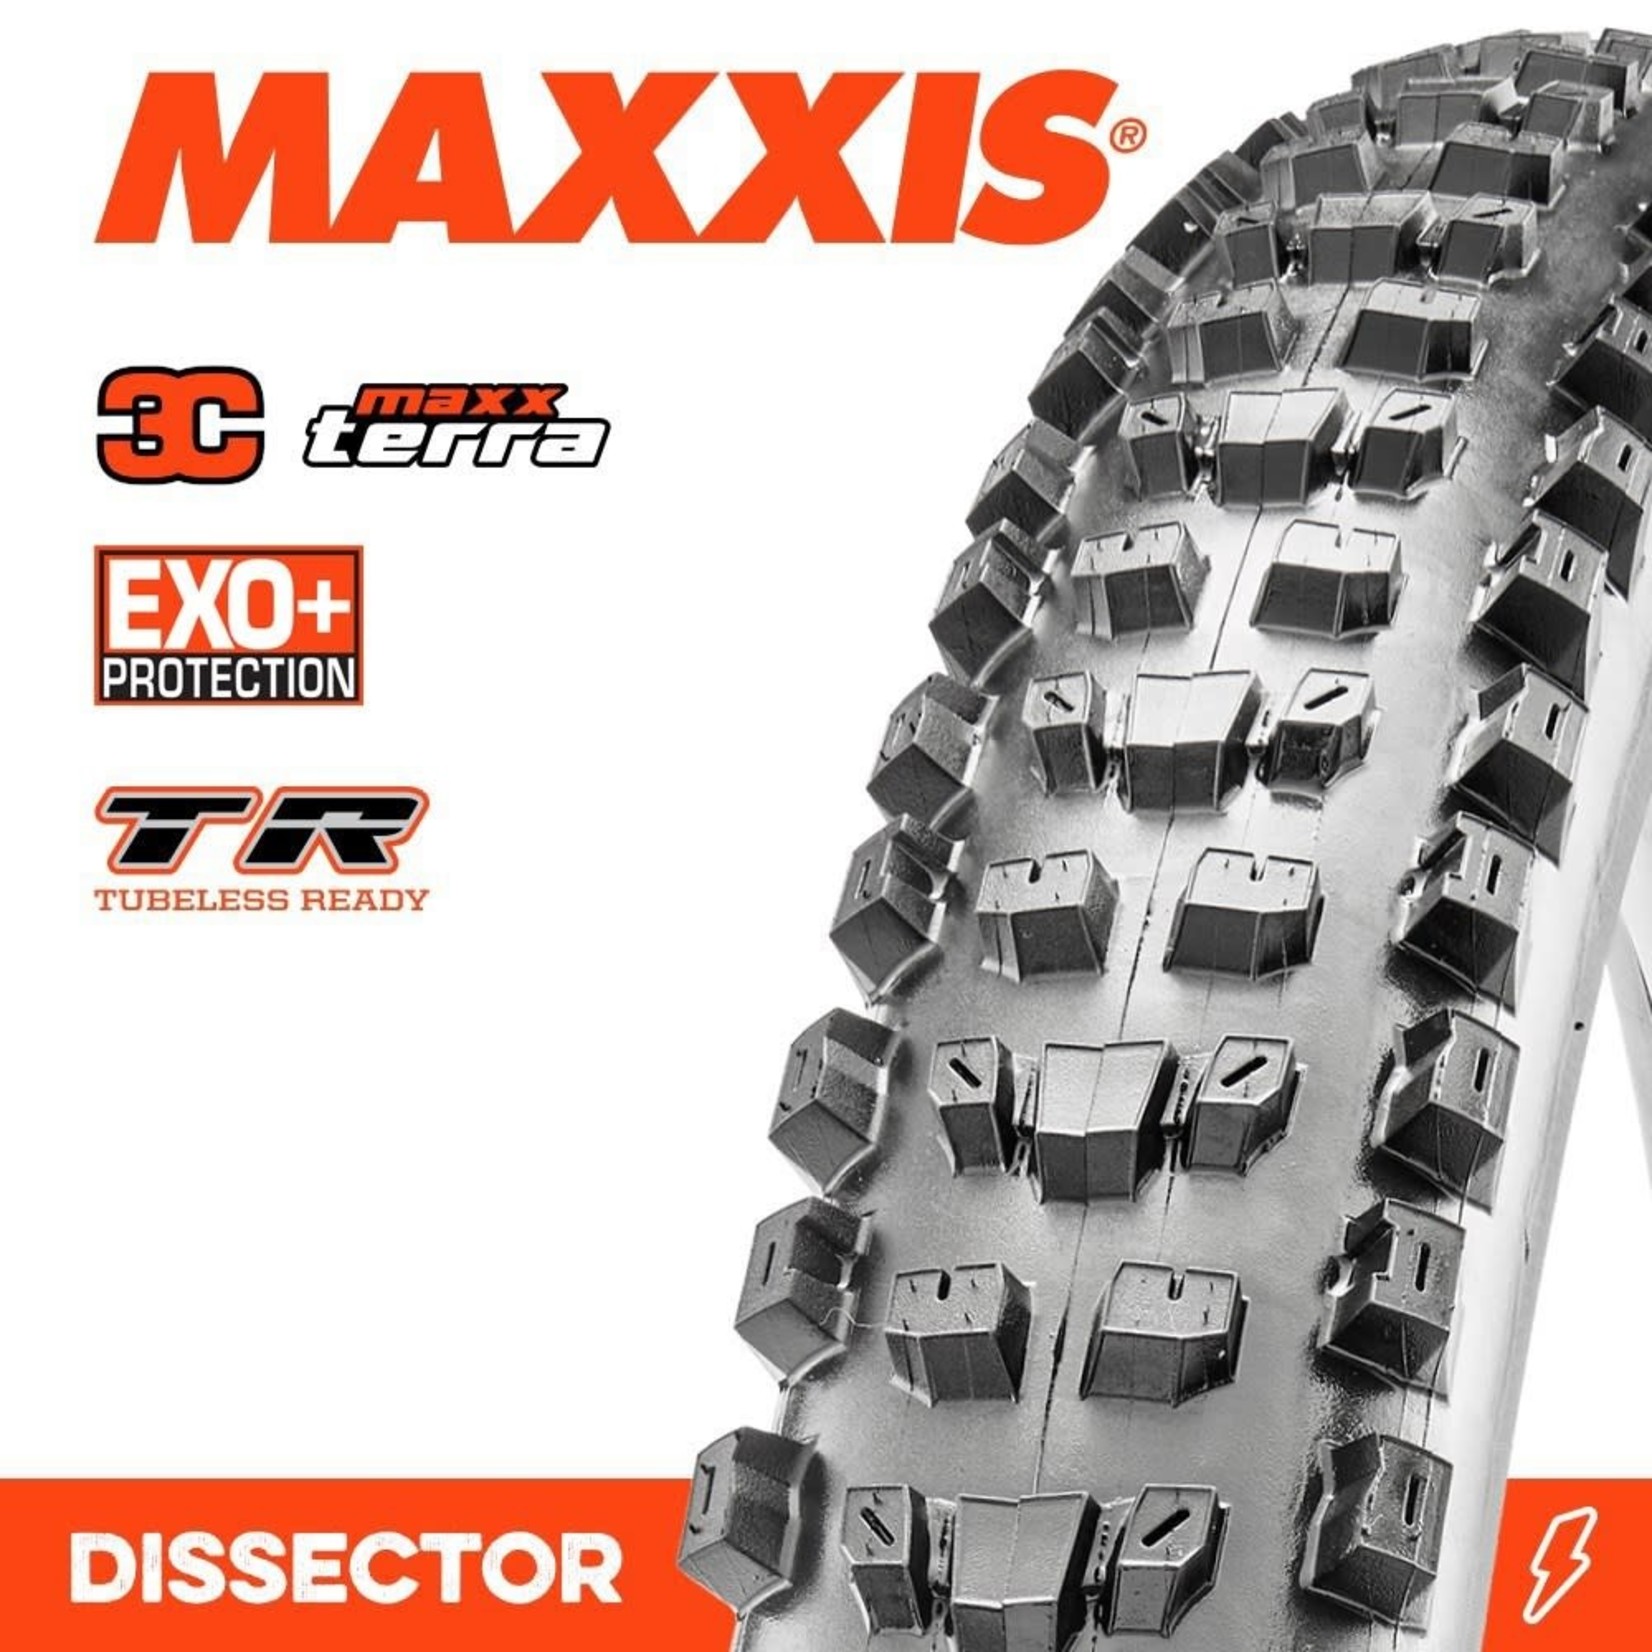 Maxxis Maxxis Dissector Bike Tyre - 29 X 2.60 - 3C Terra Exo+ TR Folding 120TPI - Pair